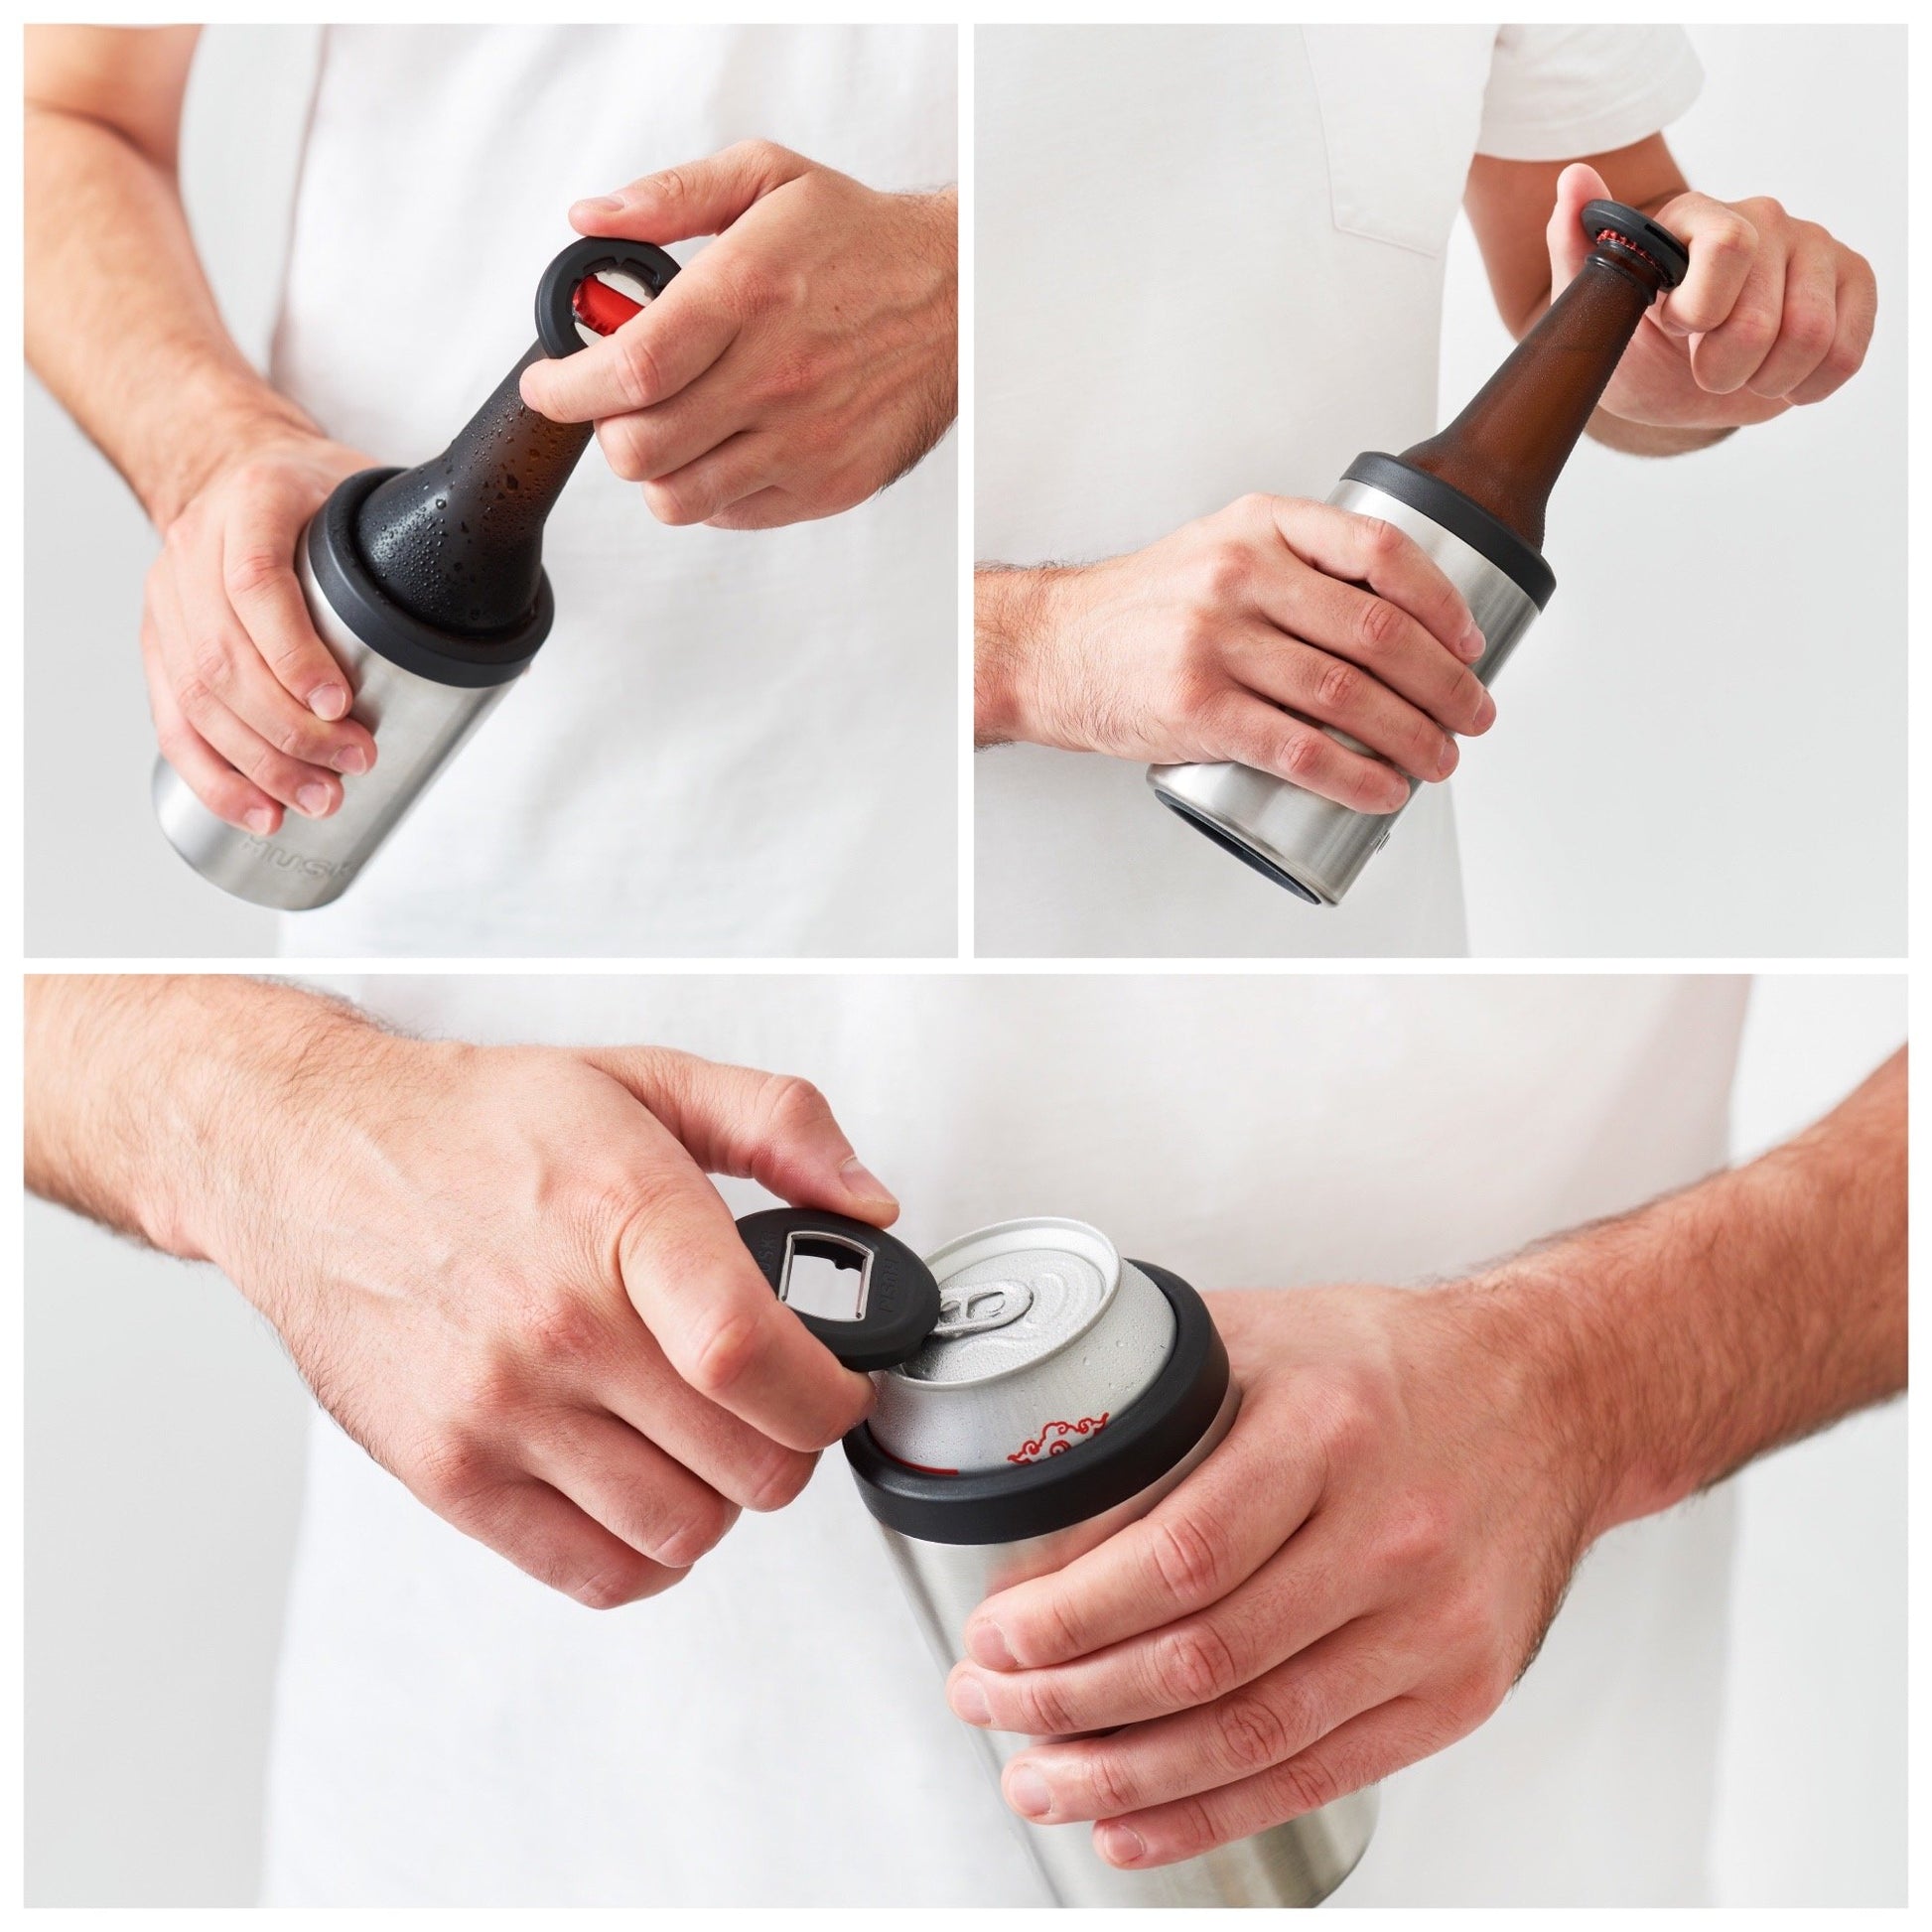 Huski Beer Cooler 2.0 Huski™ –